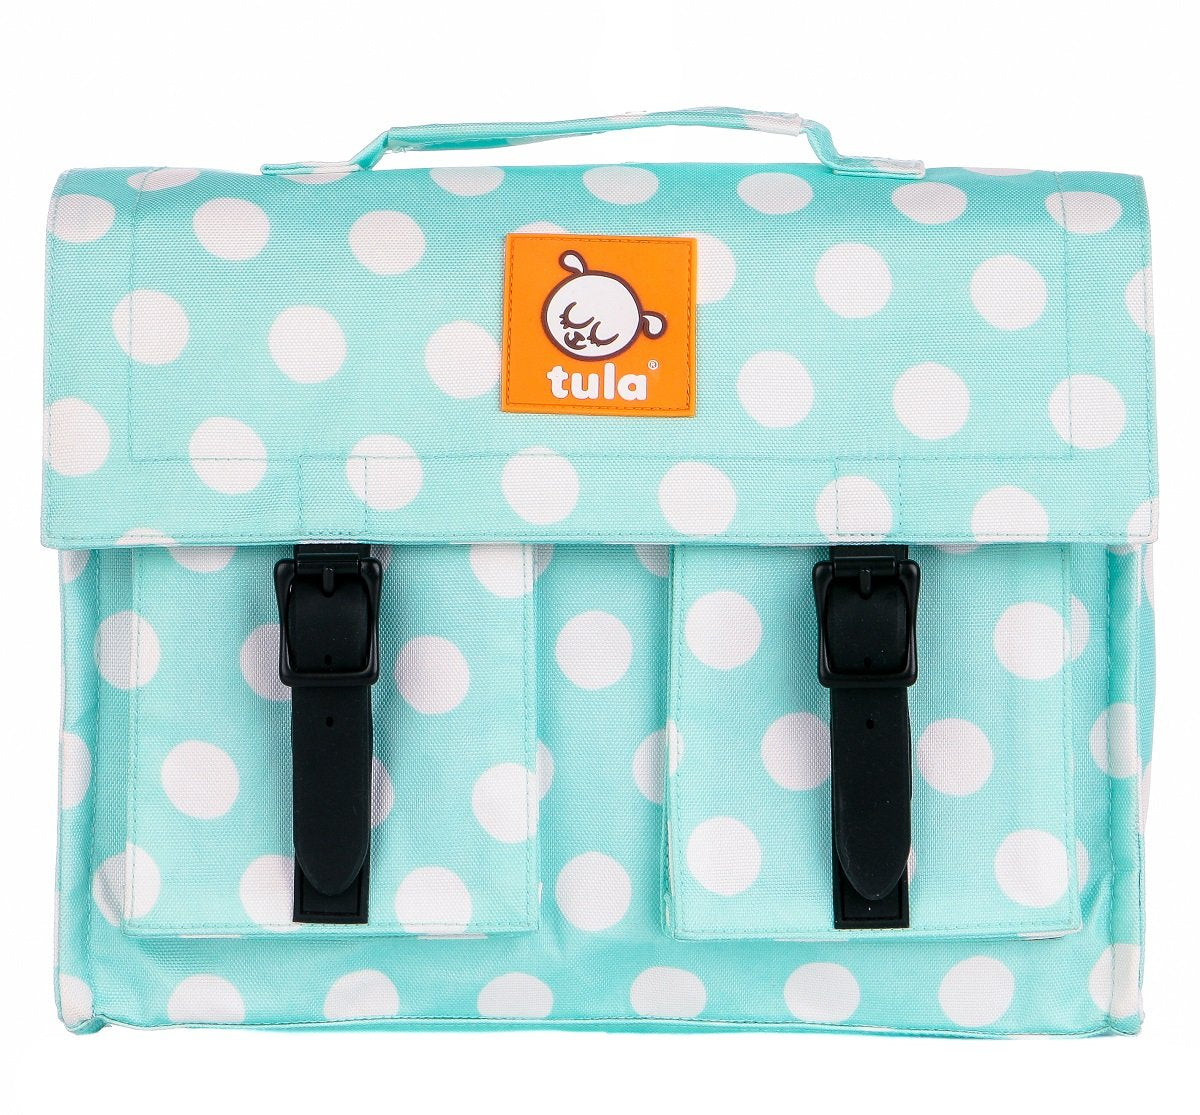 Mint Candy Dots - Tula rugzak voor kinderen - Baby Tula